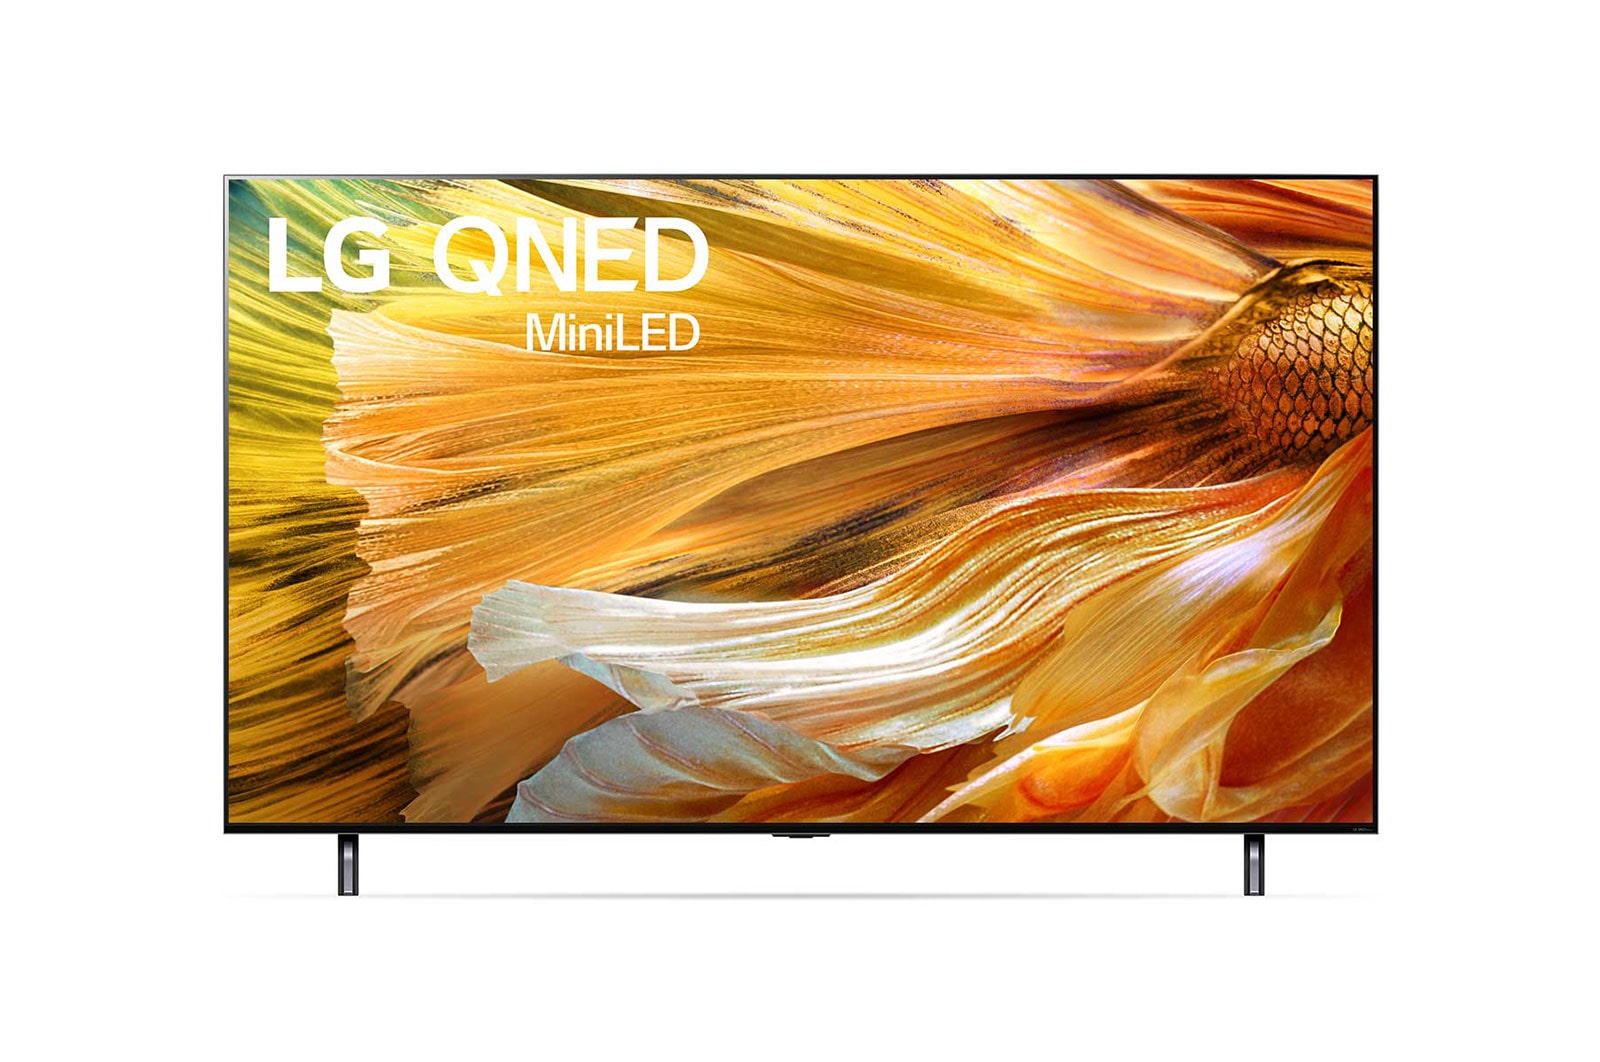 LG Televisor QNED Mini LED 65" 4K - Procesador Alpha 7 Gen 4 - Cinema HDR, Sonido Dolby Atmos - Inteligencia Artificial, 65QNED90SPA